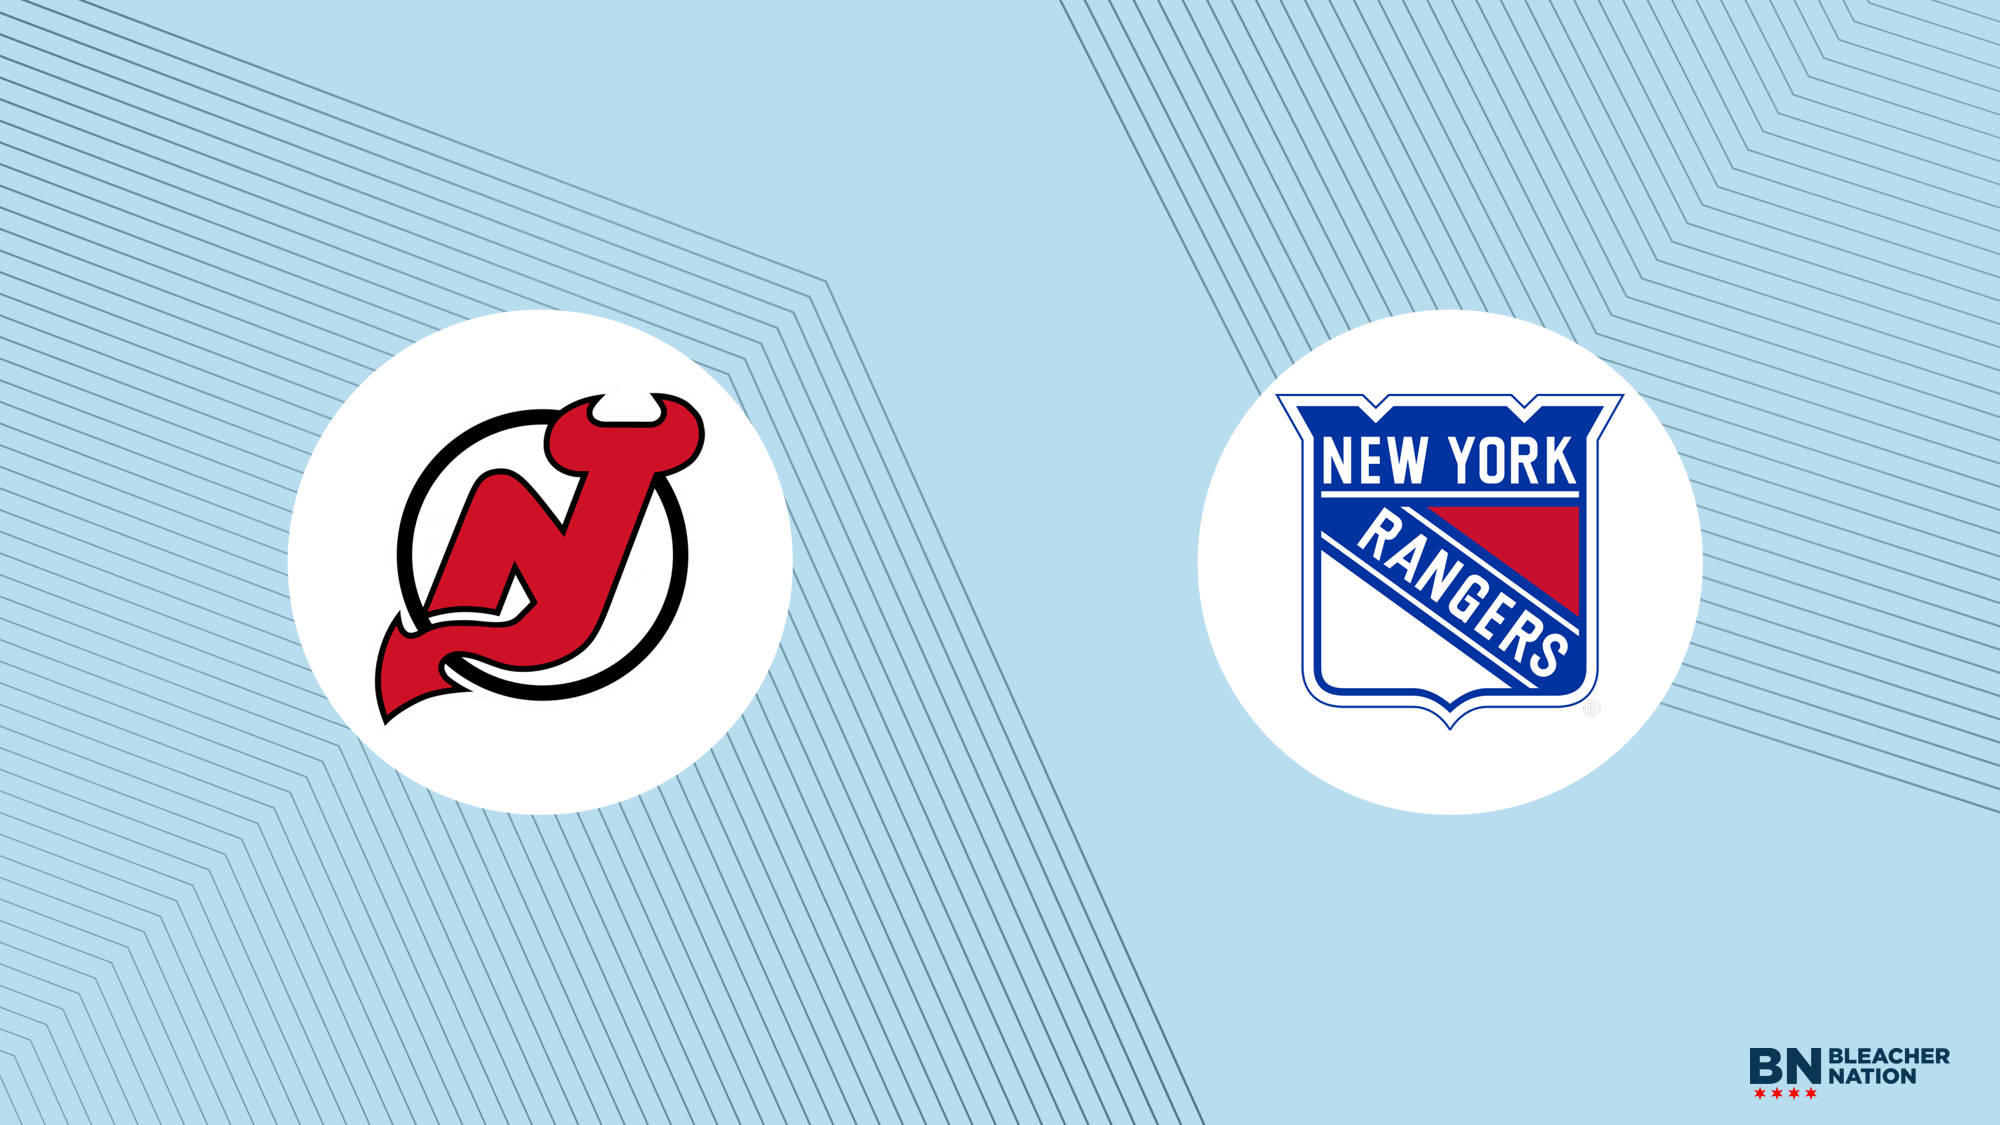 New York Rangers vs. New Jersey Devils Tickets